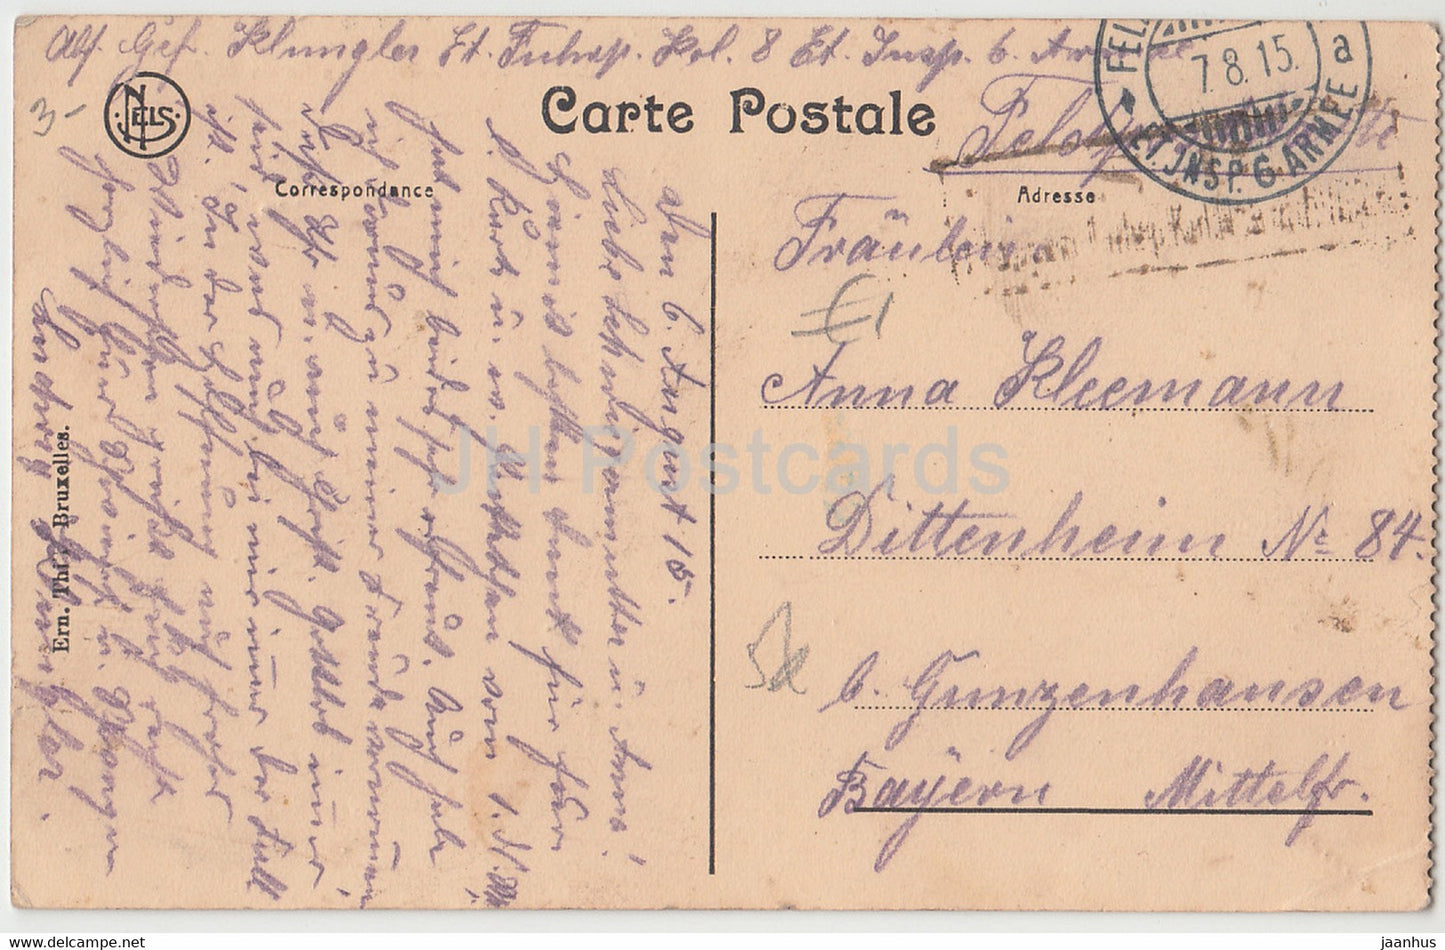 Saint Quentin - Le Palais de Justice - Feldpost - alte Postkarte - 1915 - Frankreich - gebraucht